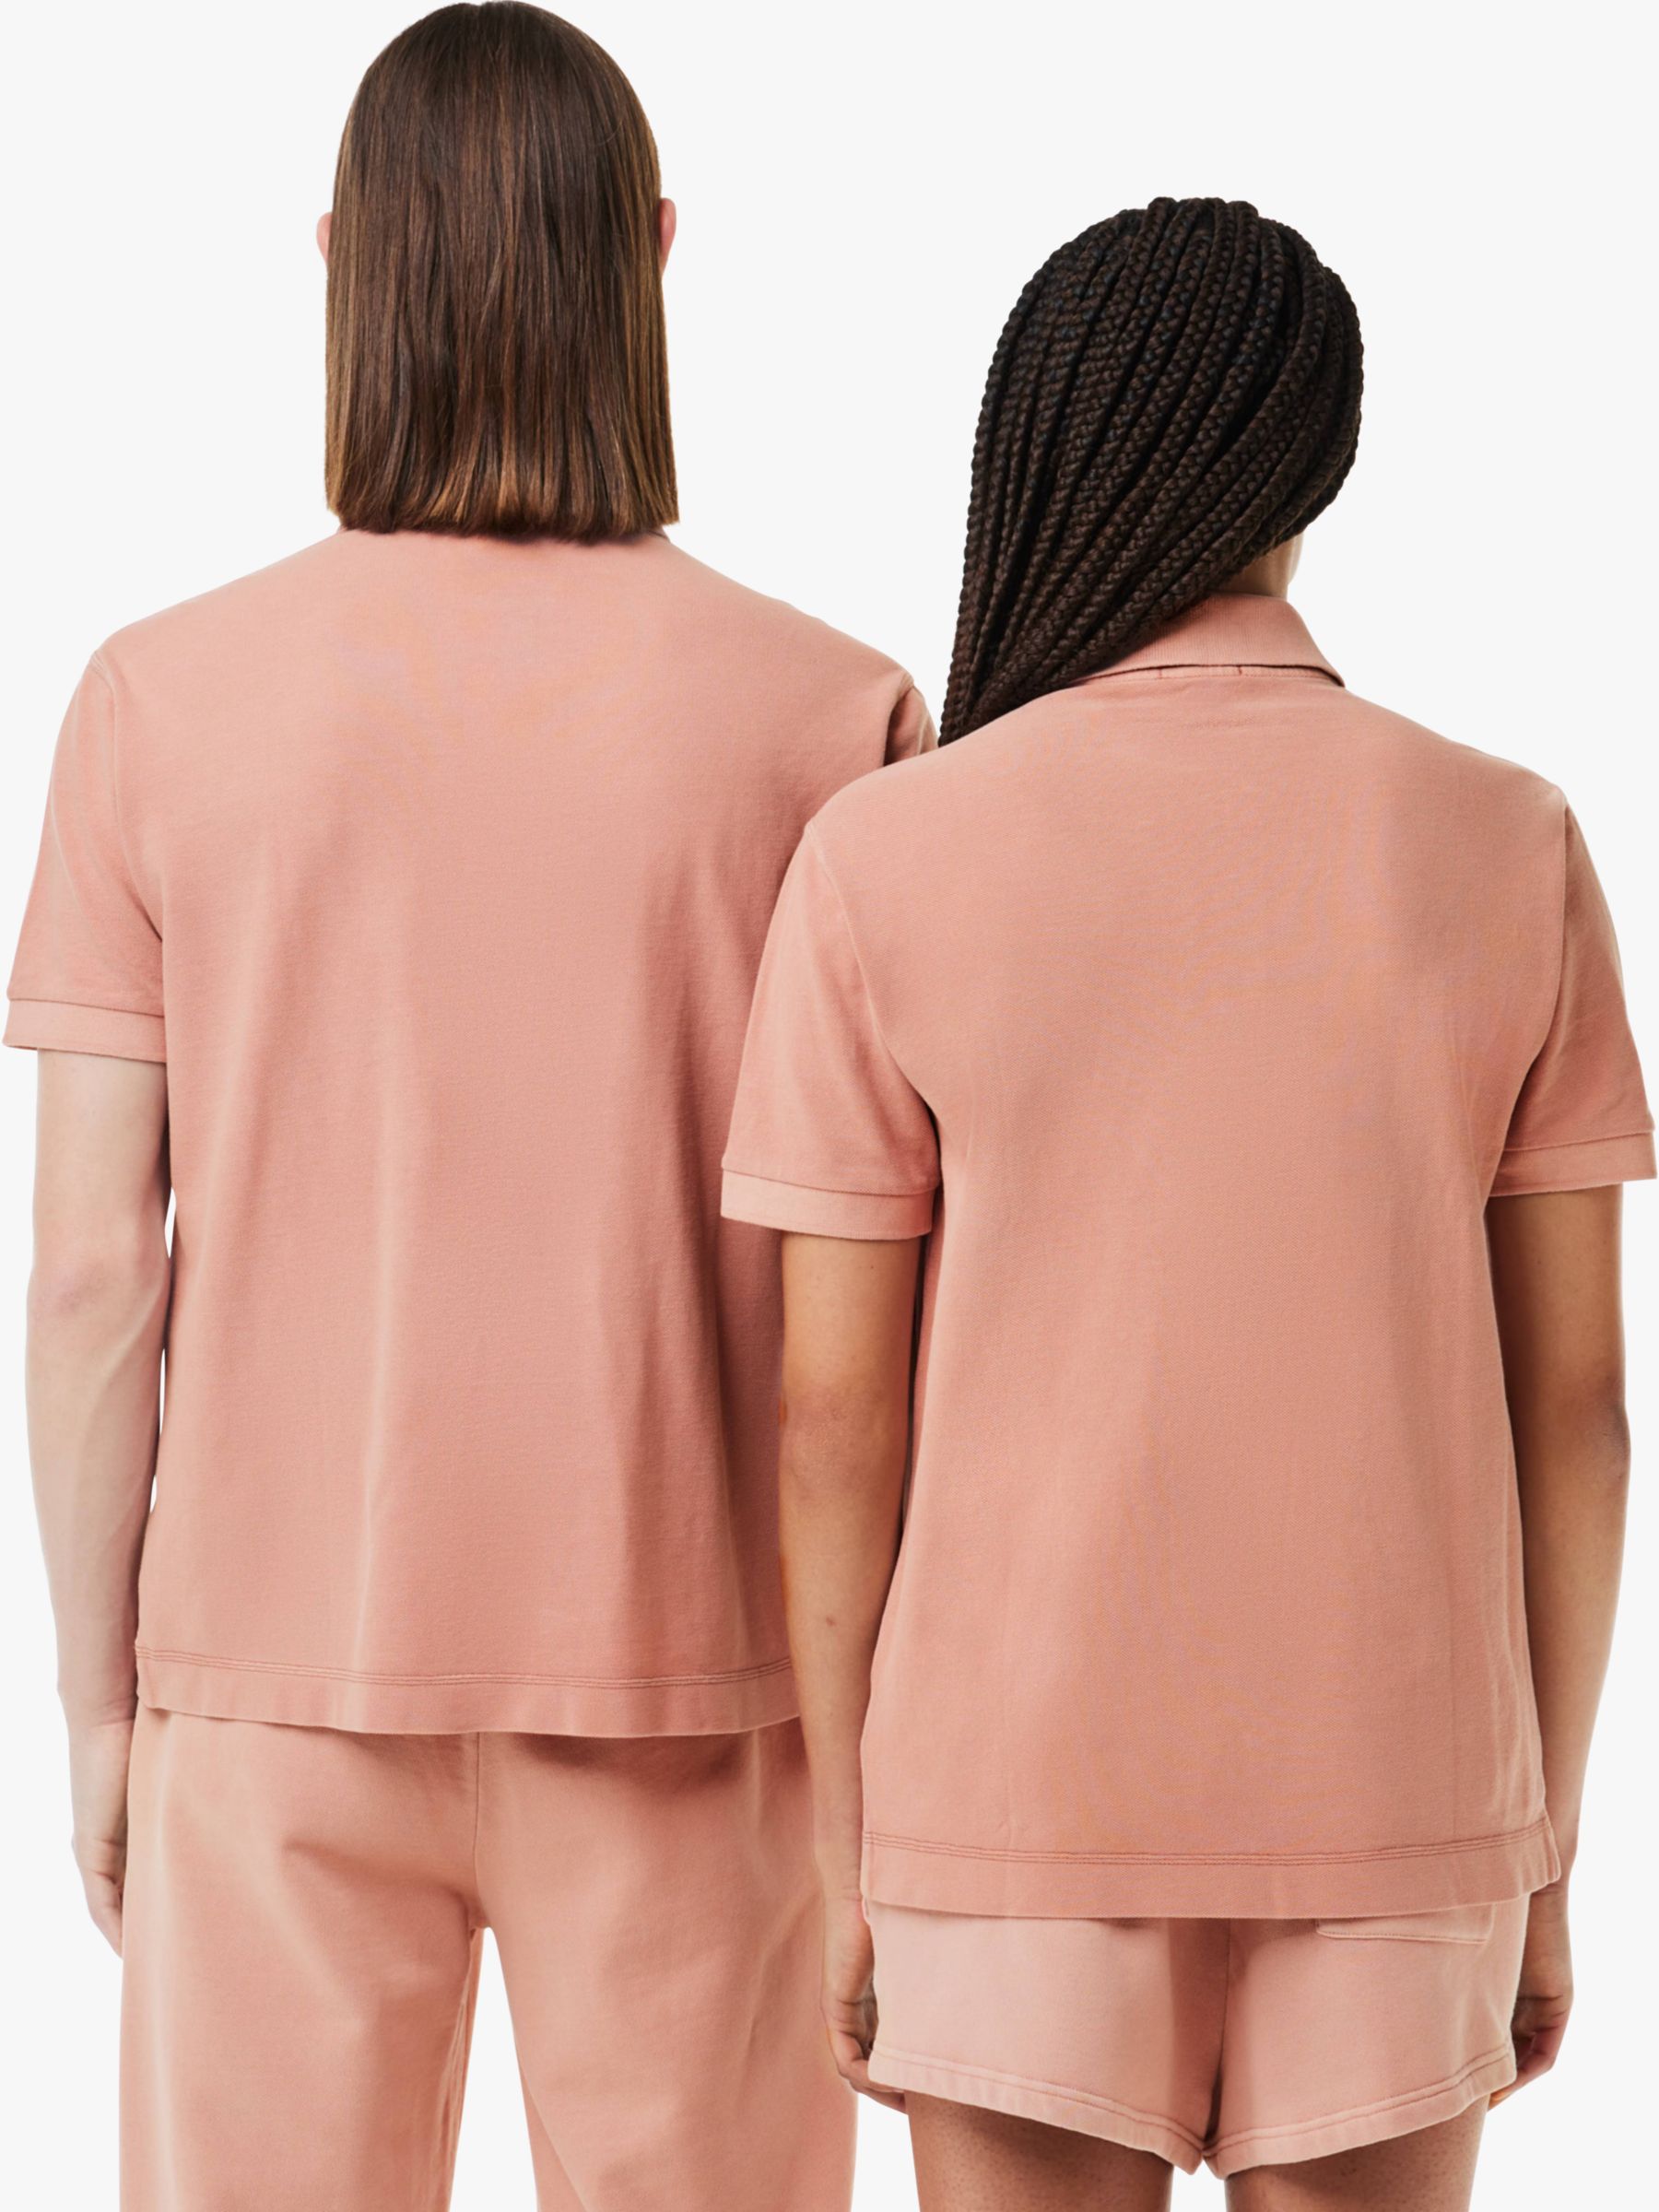 Lacoste Classic Fit Cotton Piqué Short Sleeve Polo Shirt, Eco Pink, S